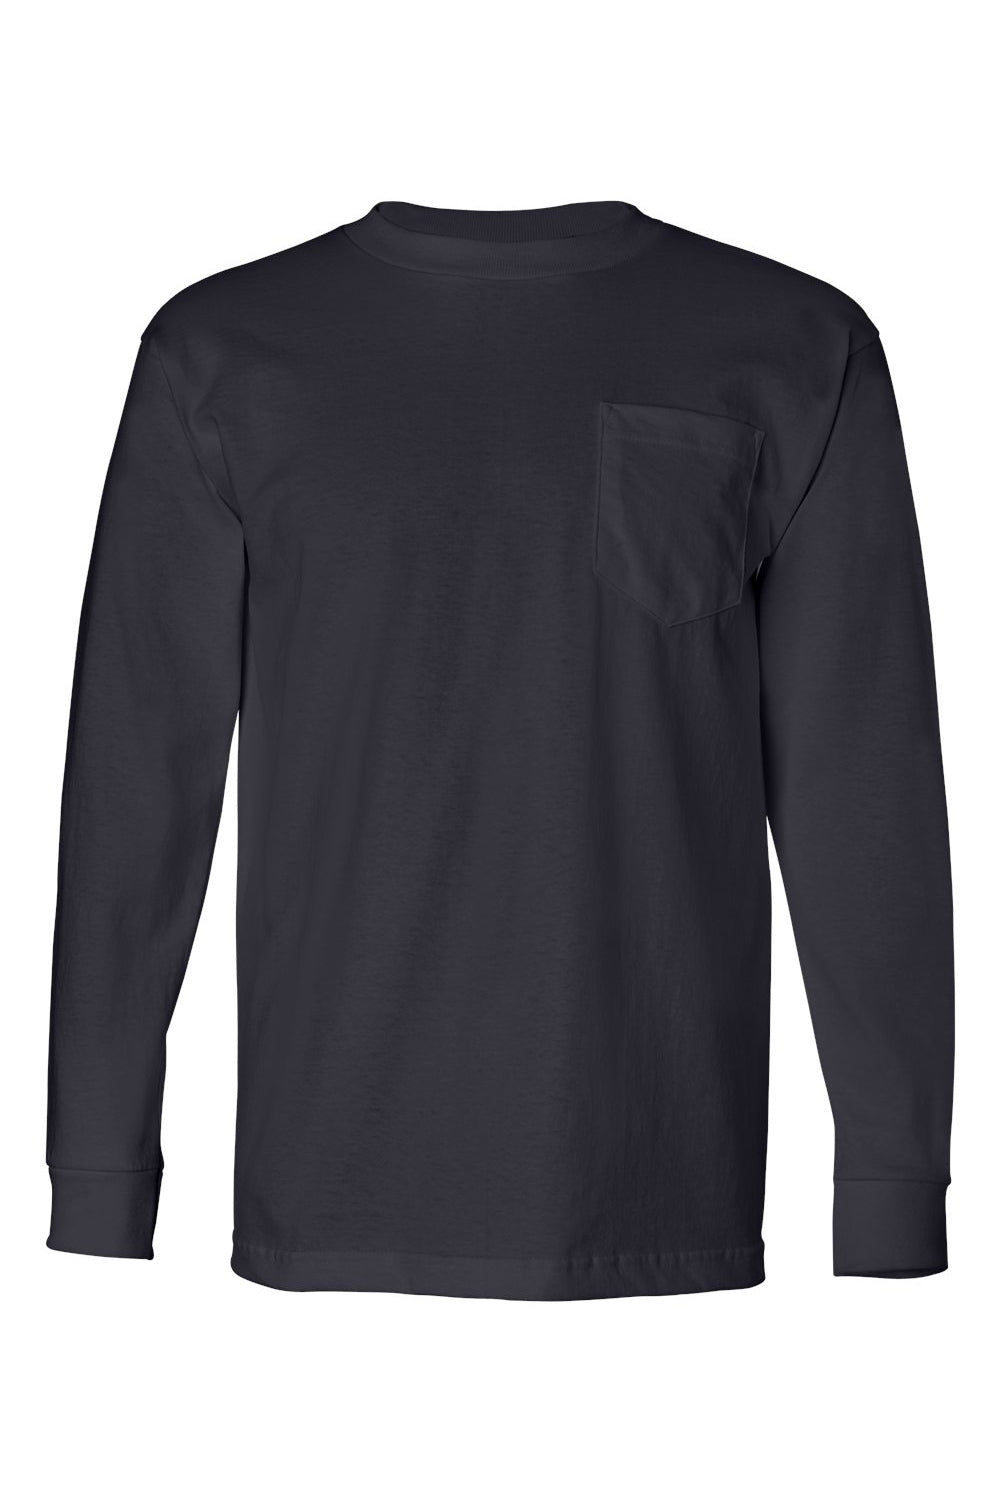 Bayside BA8100 Mens USA Made Long Sleeve Crewneck T-Shirt w/ Pocket Navy Blue Flat Front